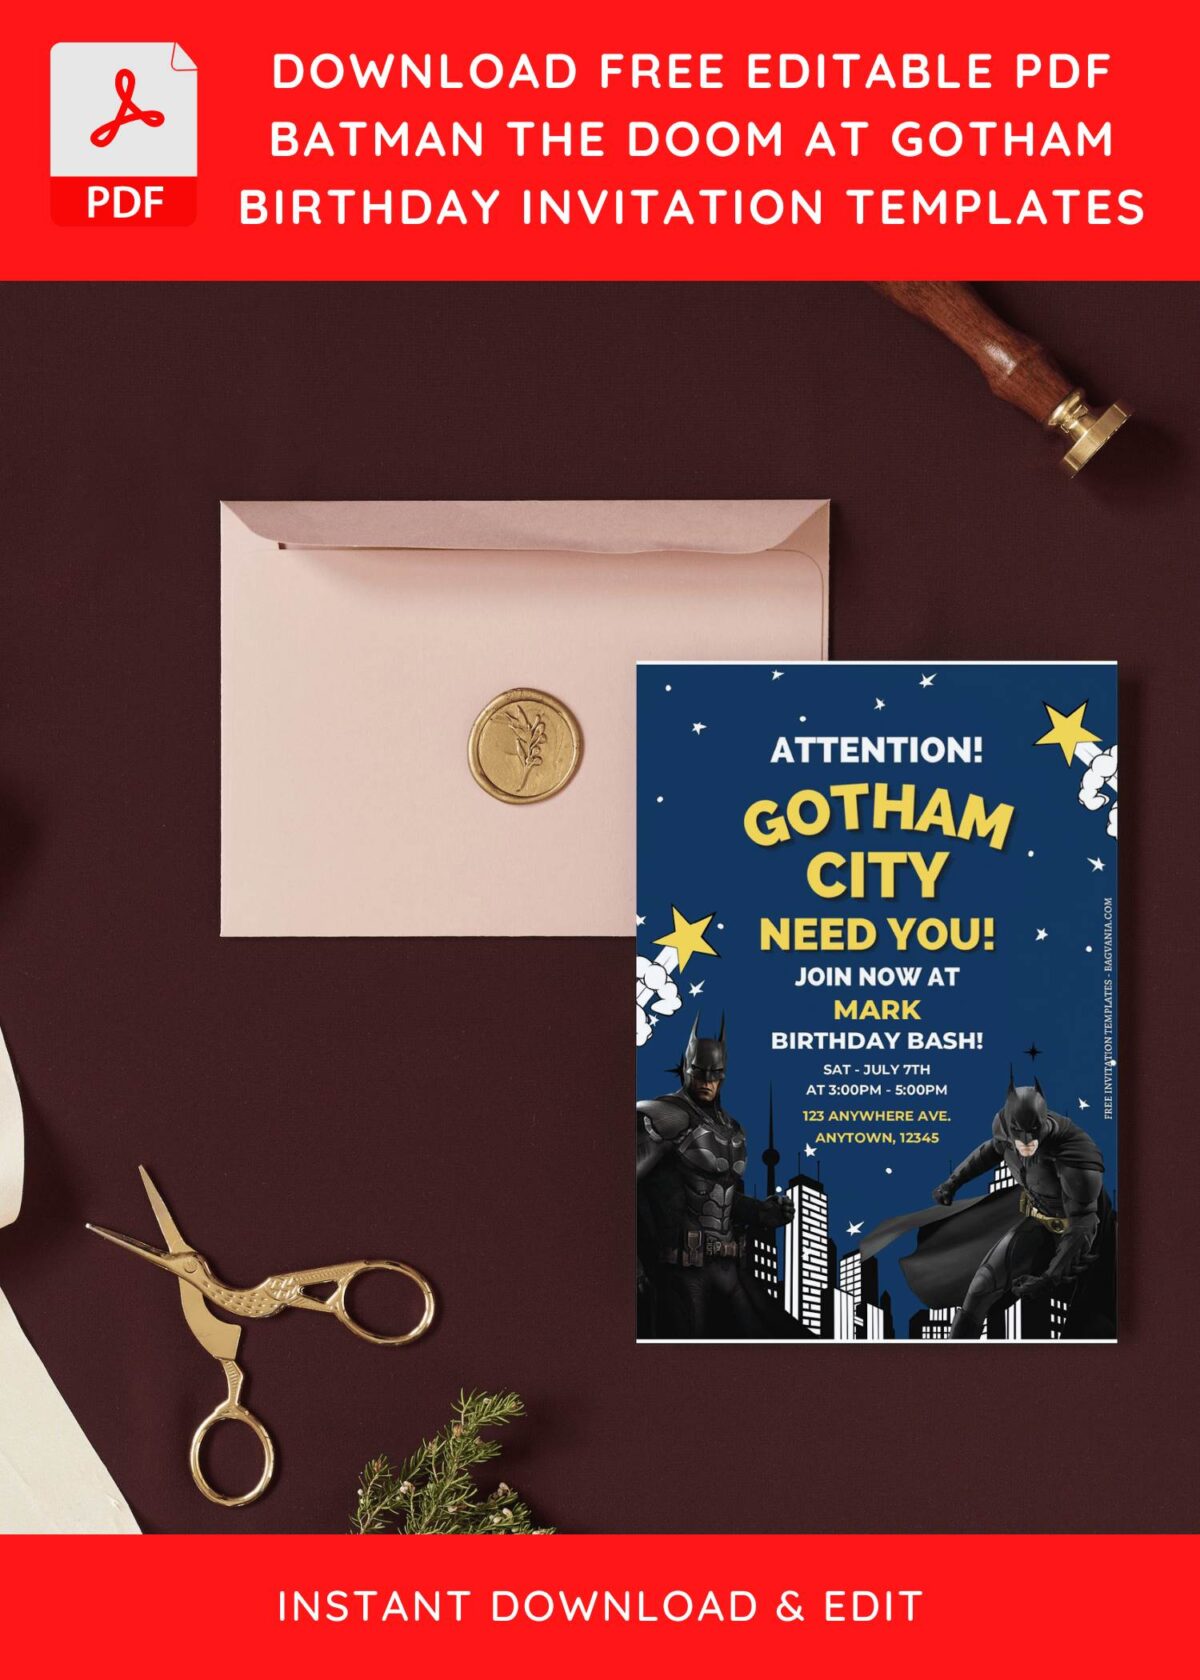 (Free Editable PDF) Gotham City Batman Birthday Invitation Templates I